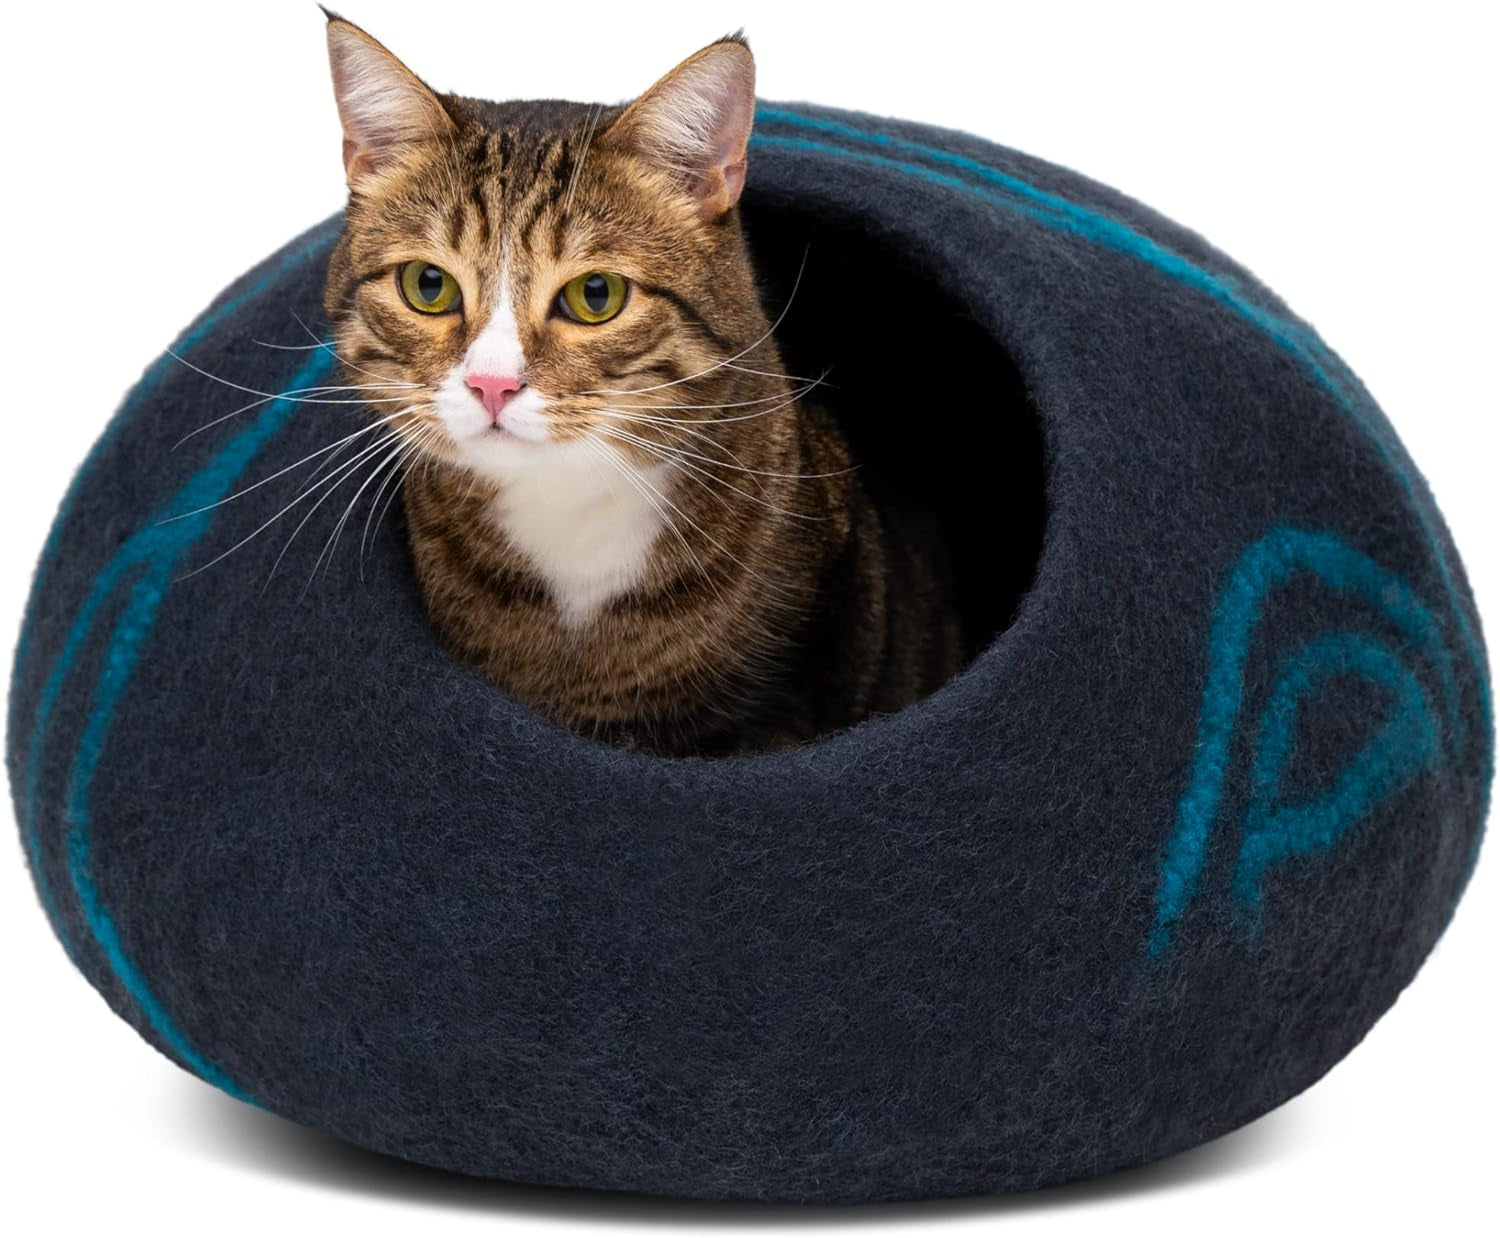 Premium Felt Cat Bed Cave - Handmade 100% Merino Wool Bed for Cats and Kittens (Dark Shades) (Large, Black Aqua)